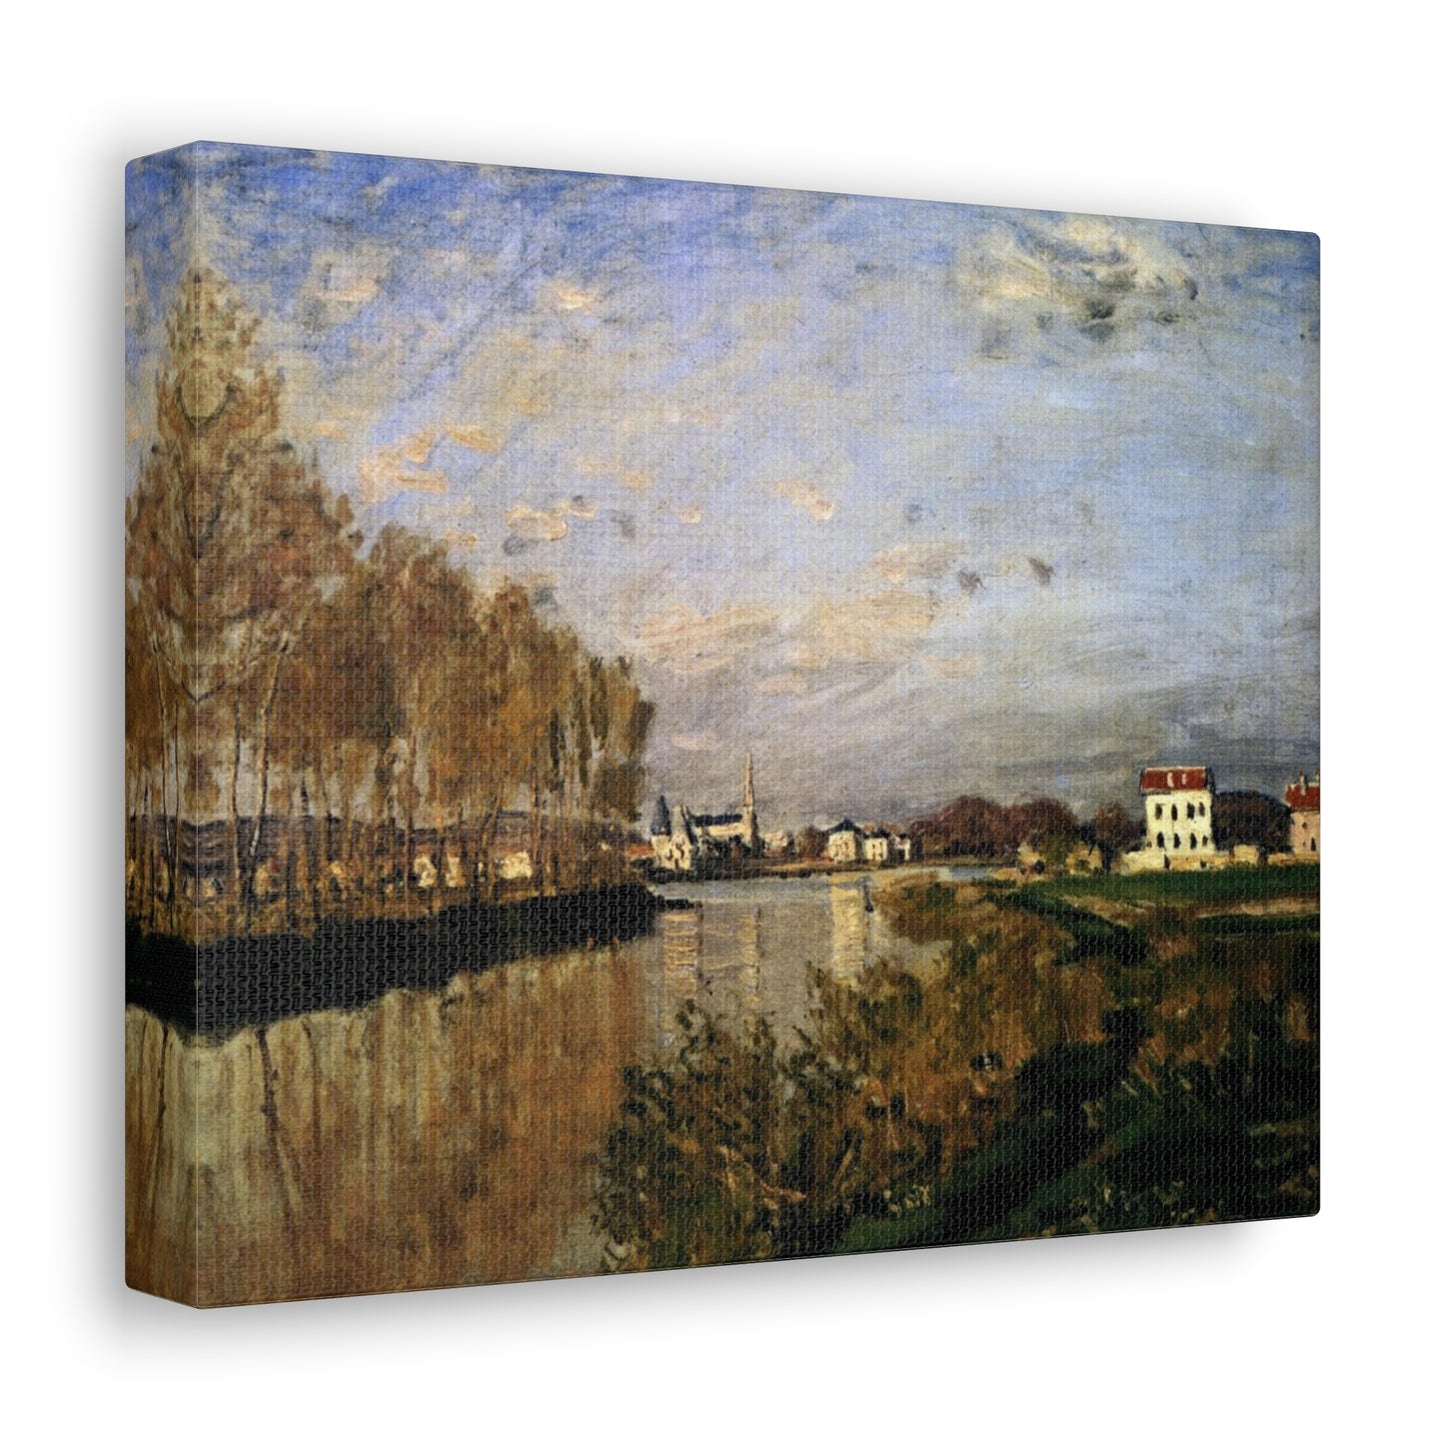 The Seine at Argenteuil by Claude Monet - Canvas Print